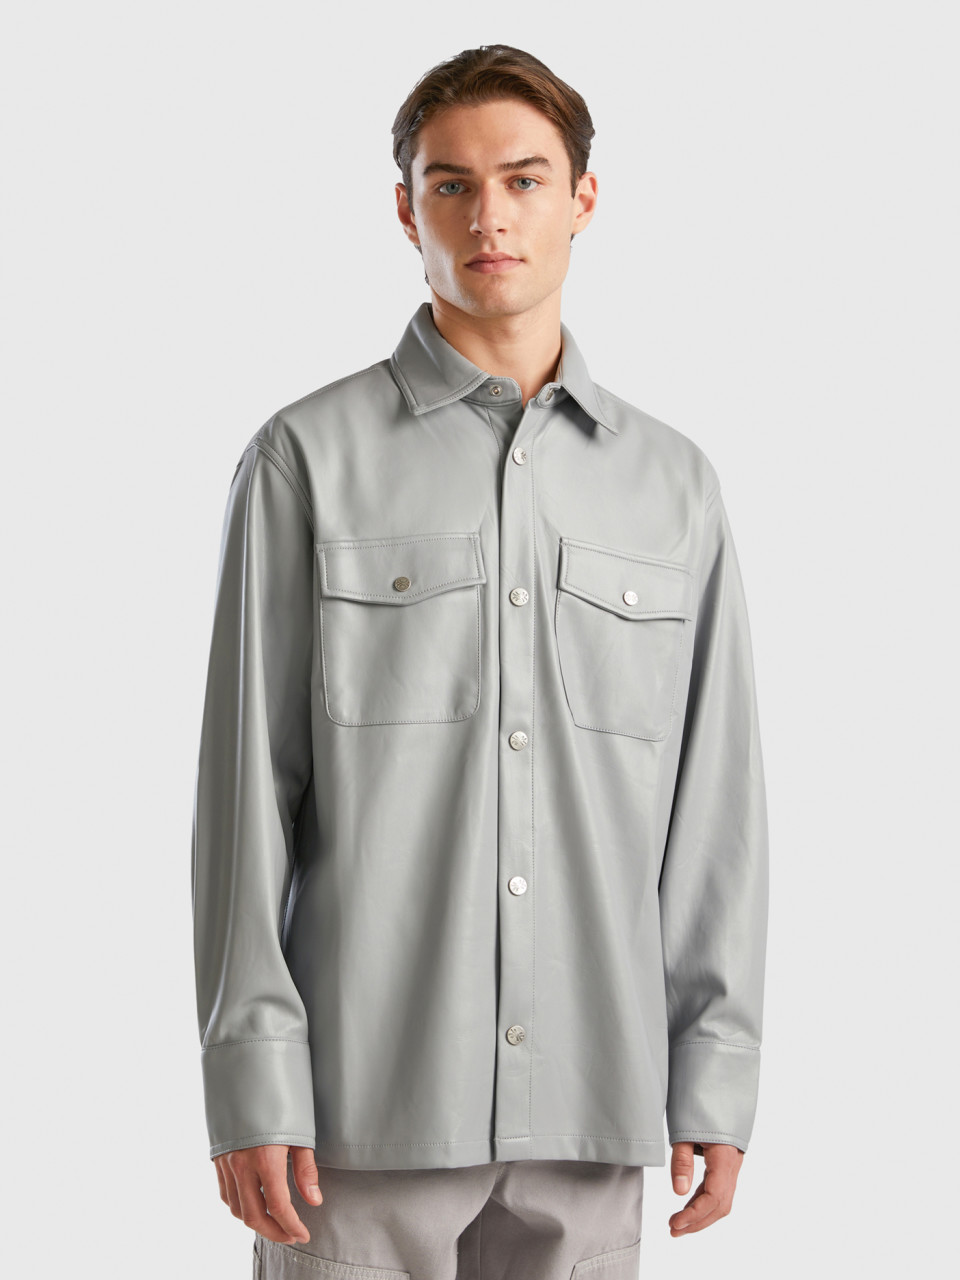 Benetton, Shirt In Imitation Leather, Light Gray, Men